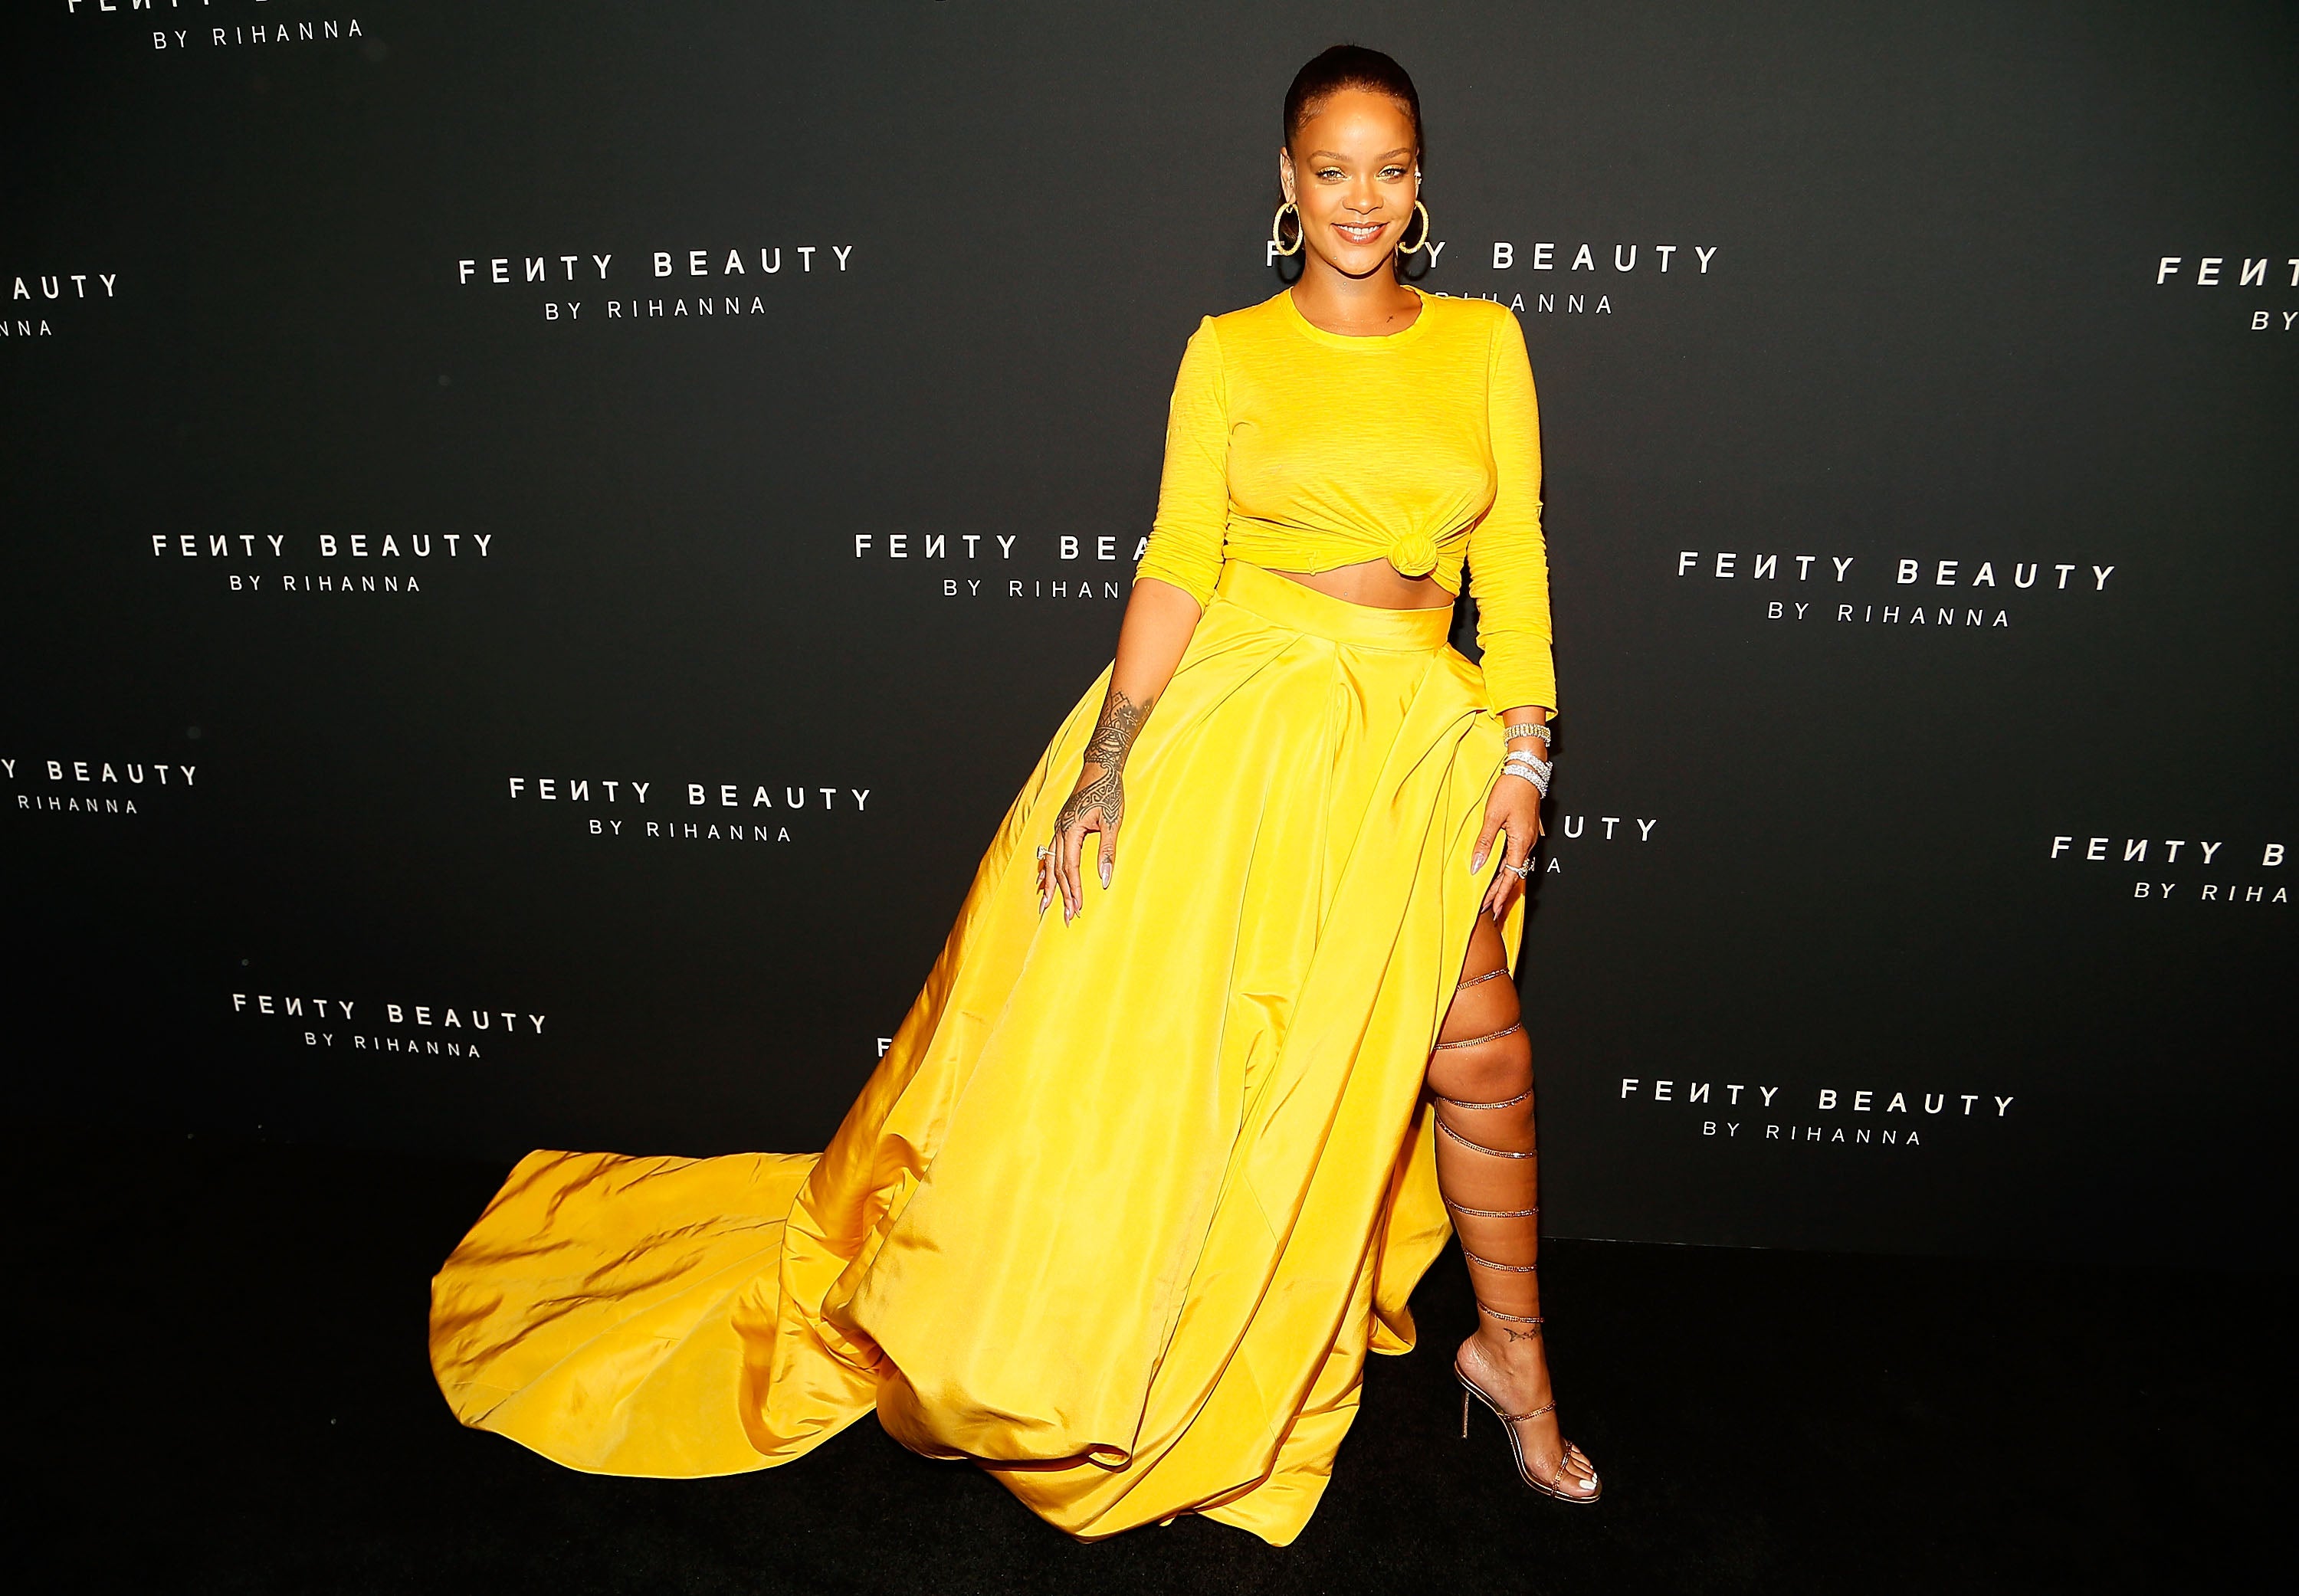 Rihanna Talks Breaking Boundaries With Fenty Beauty